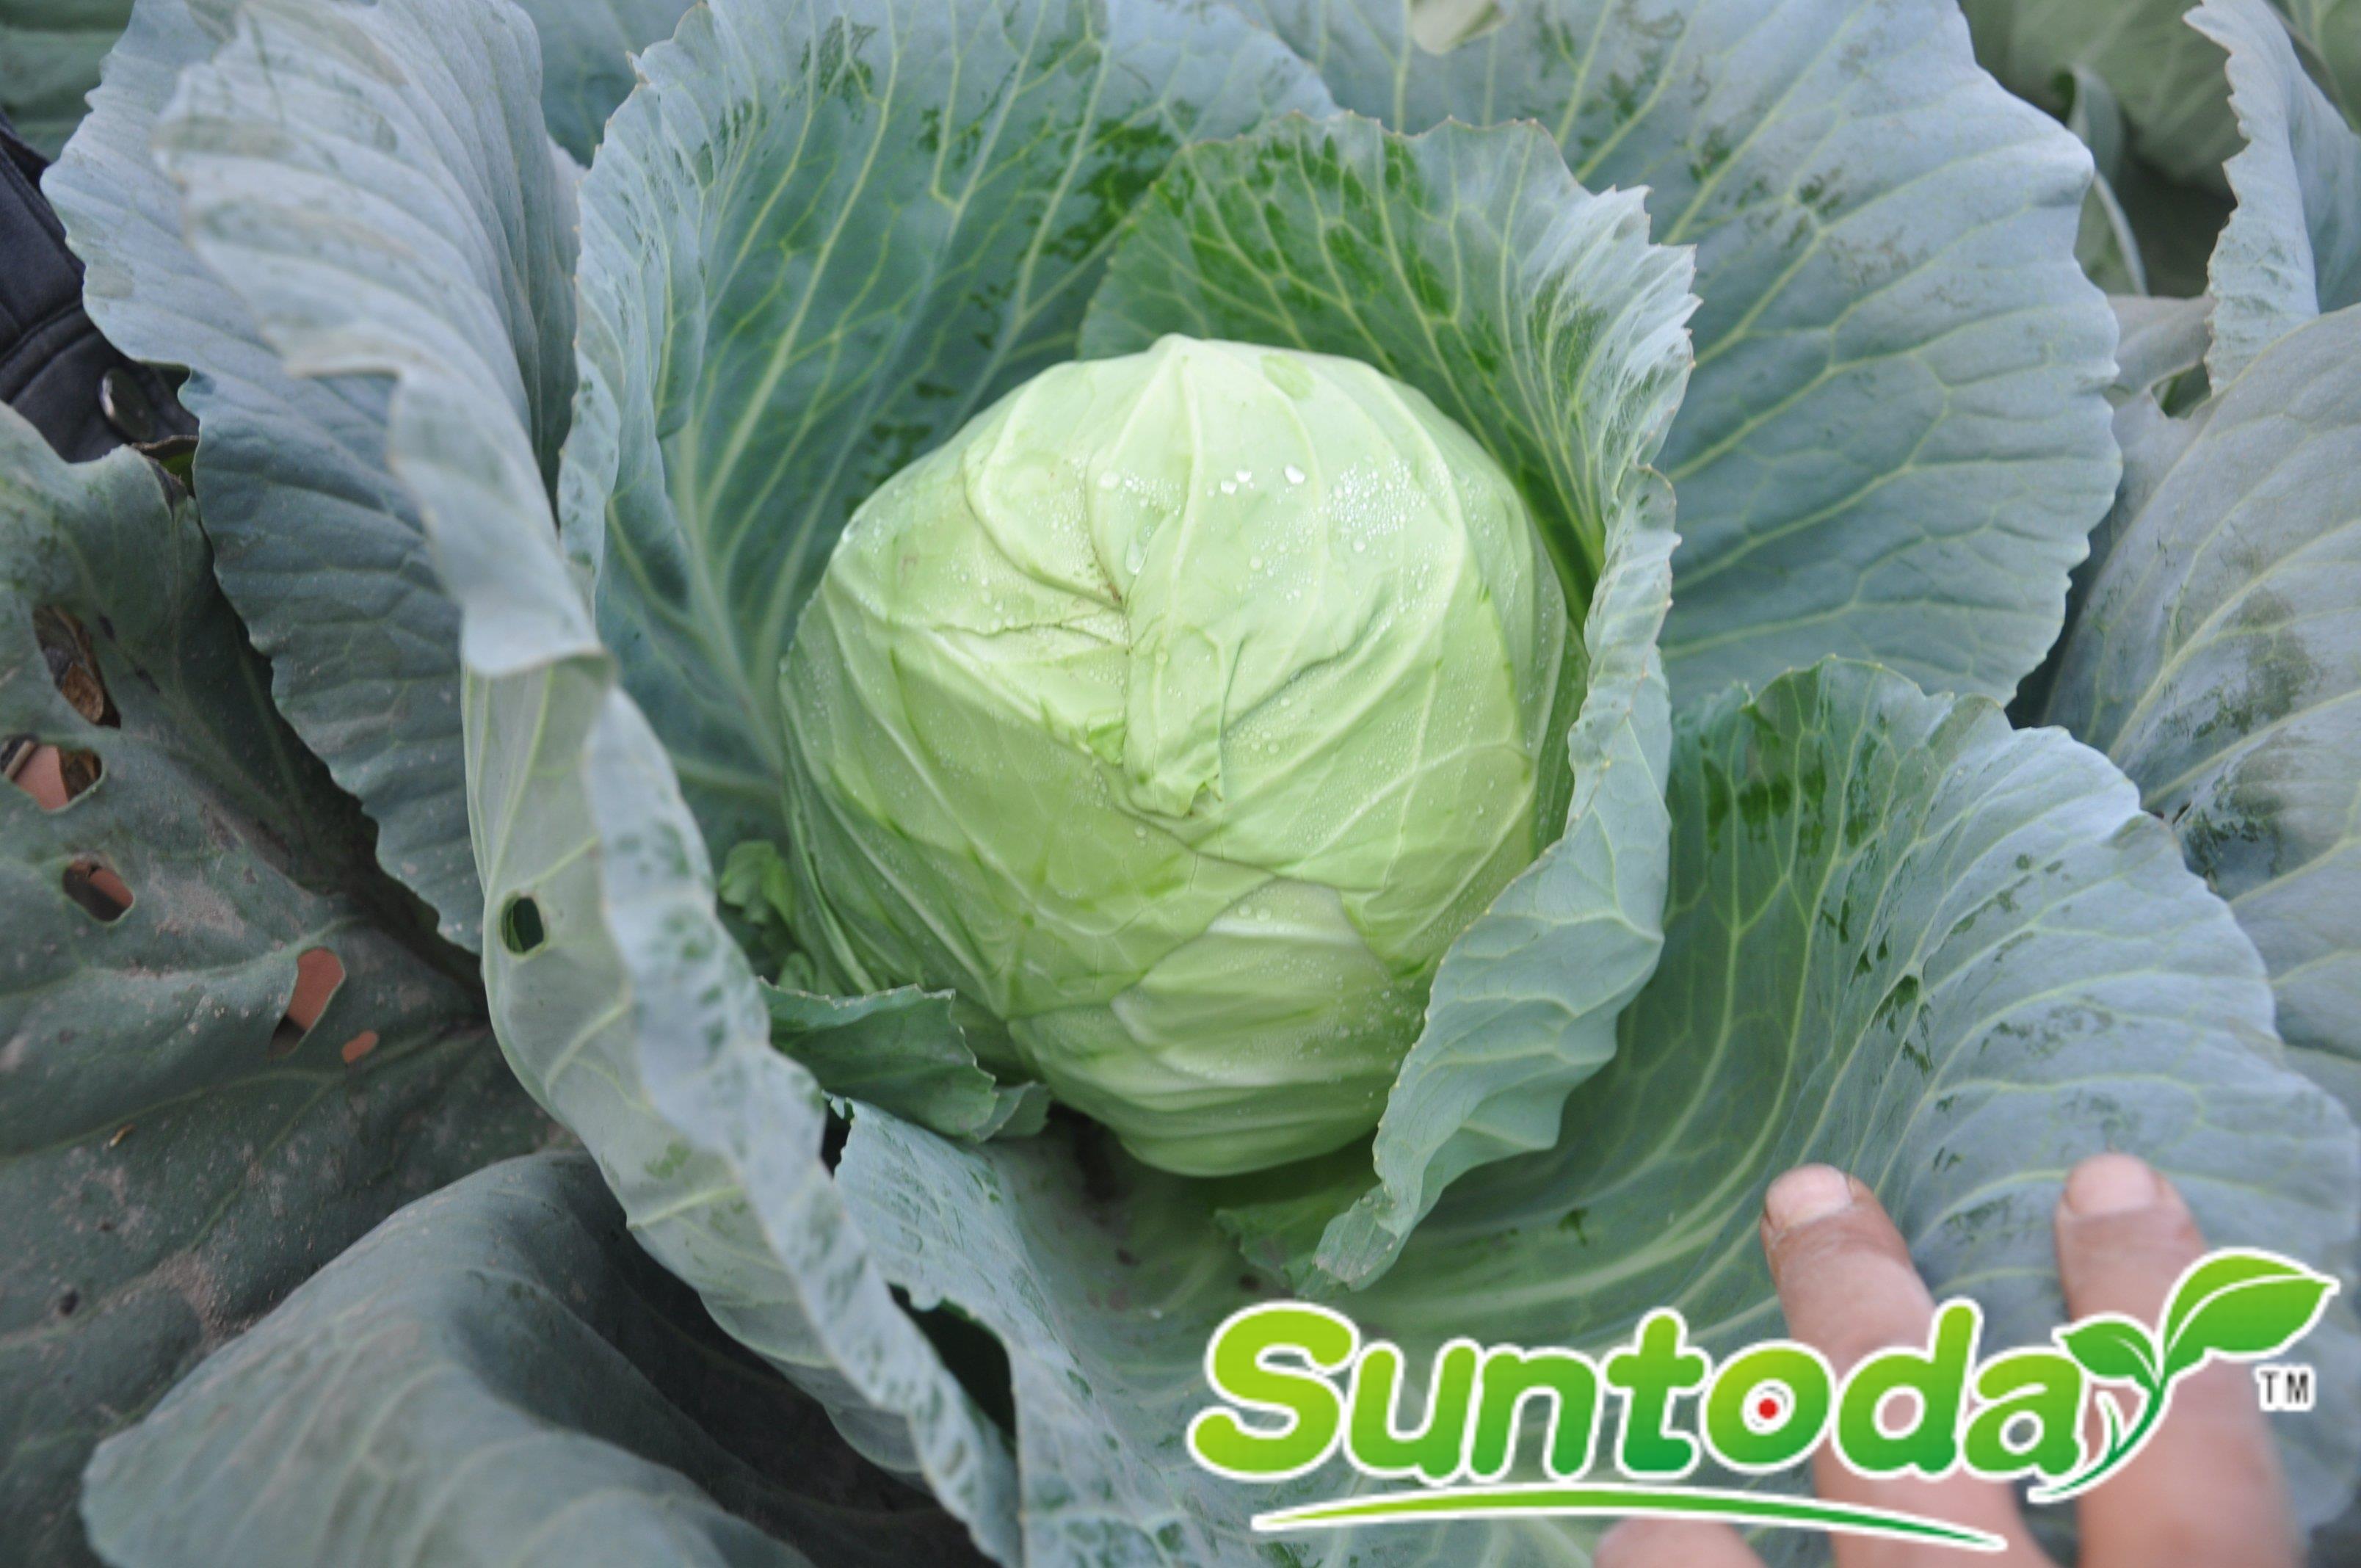 suntoday cabbage seeds(31001)